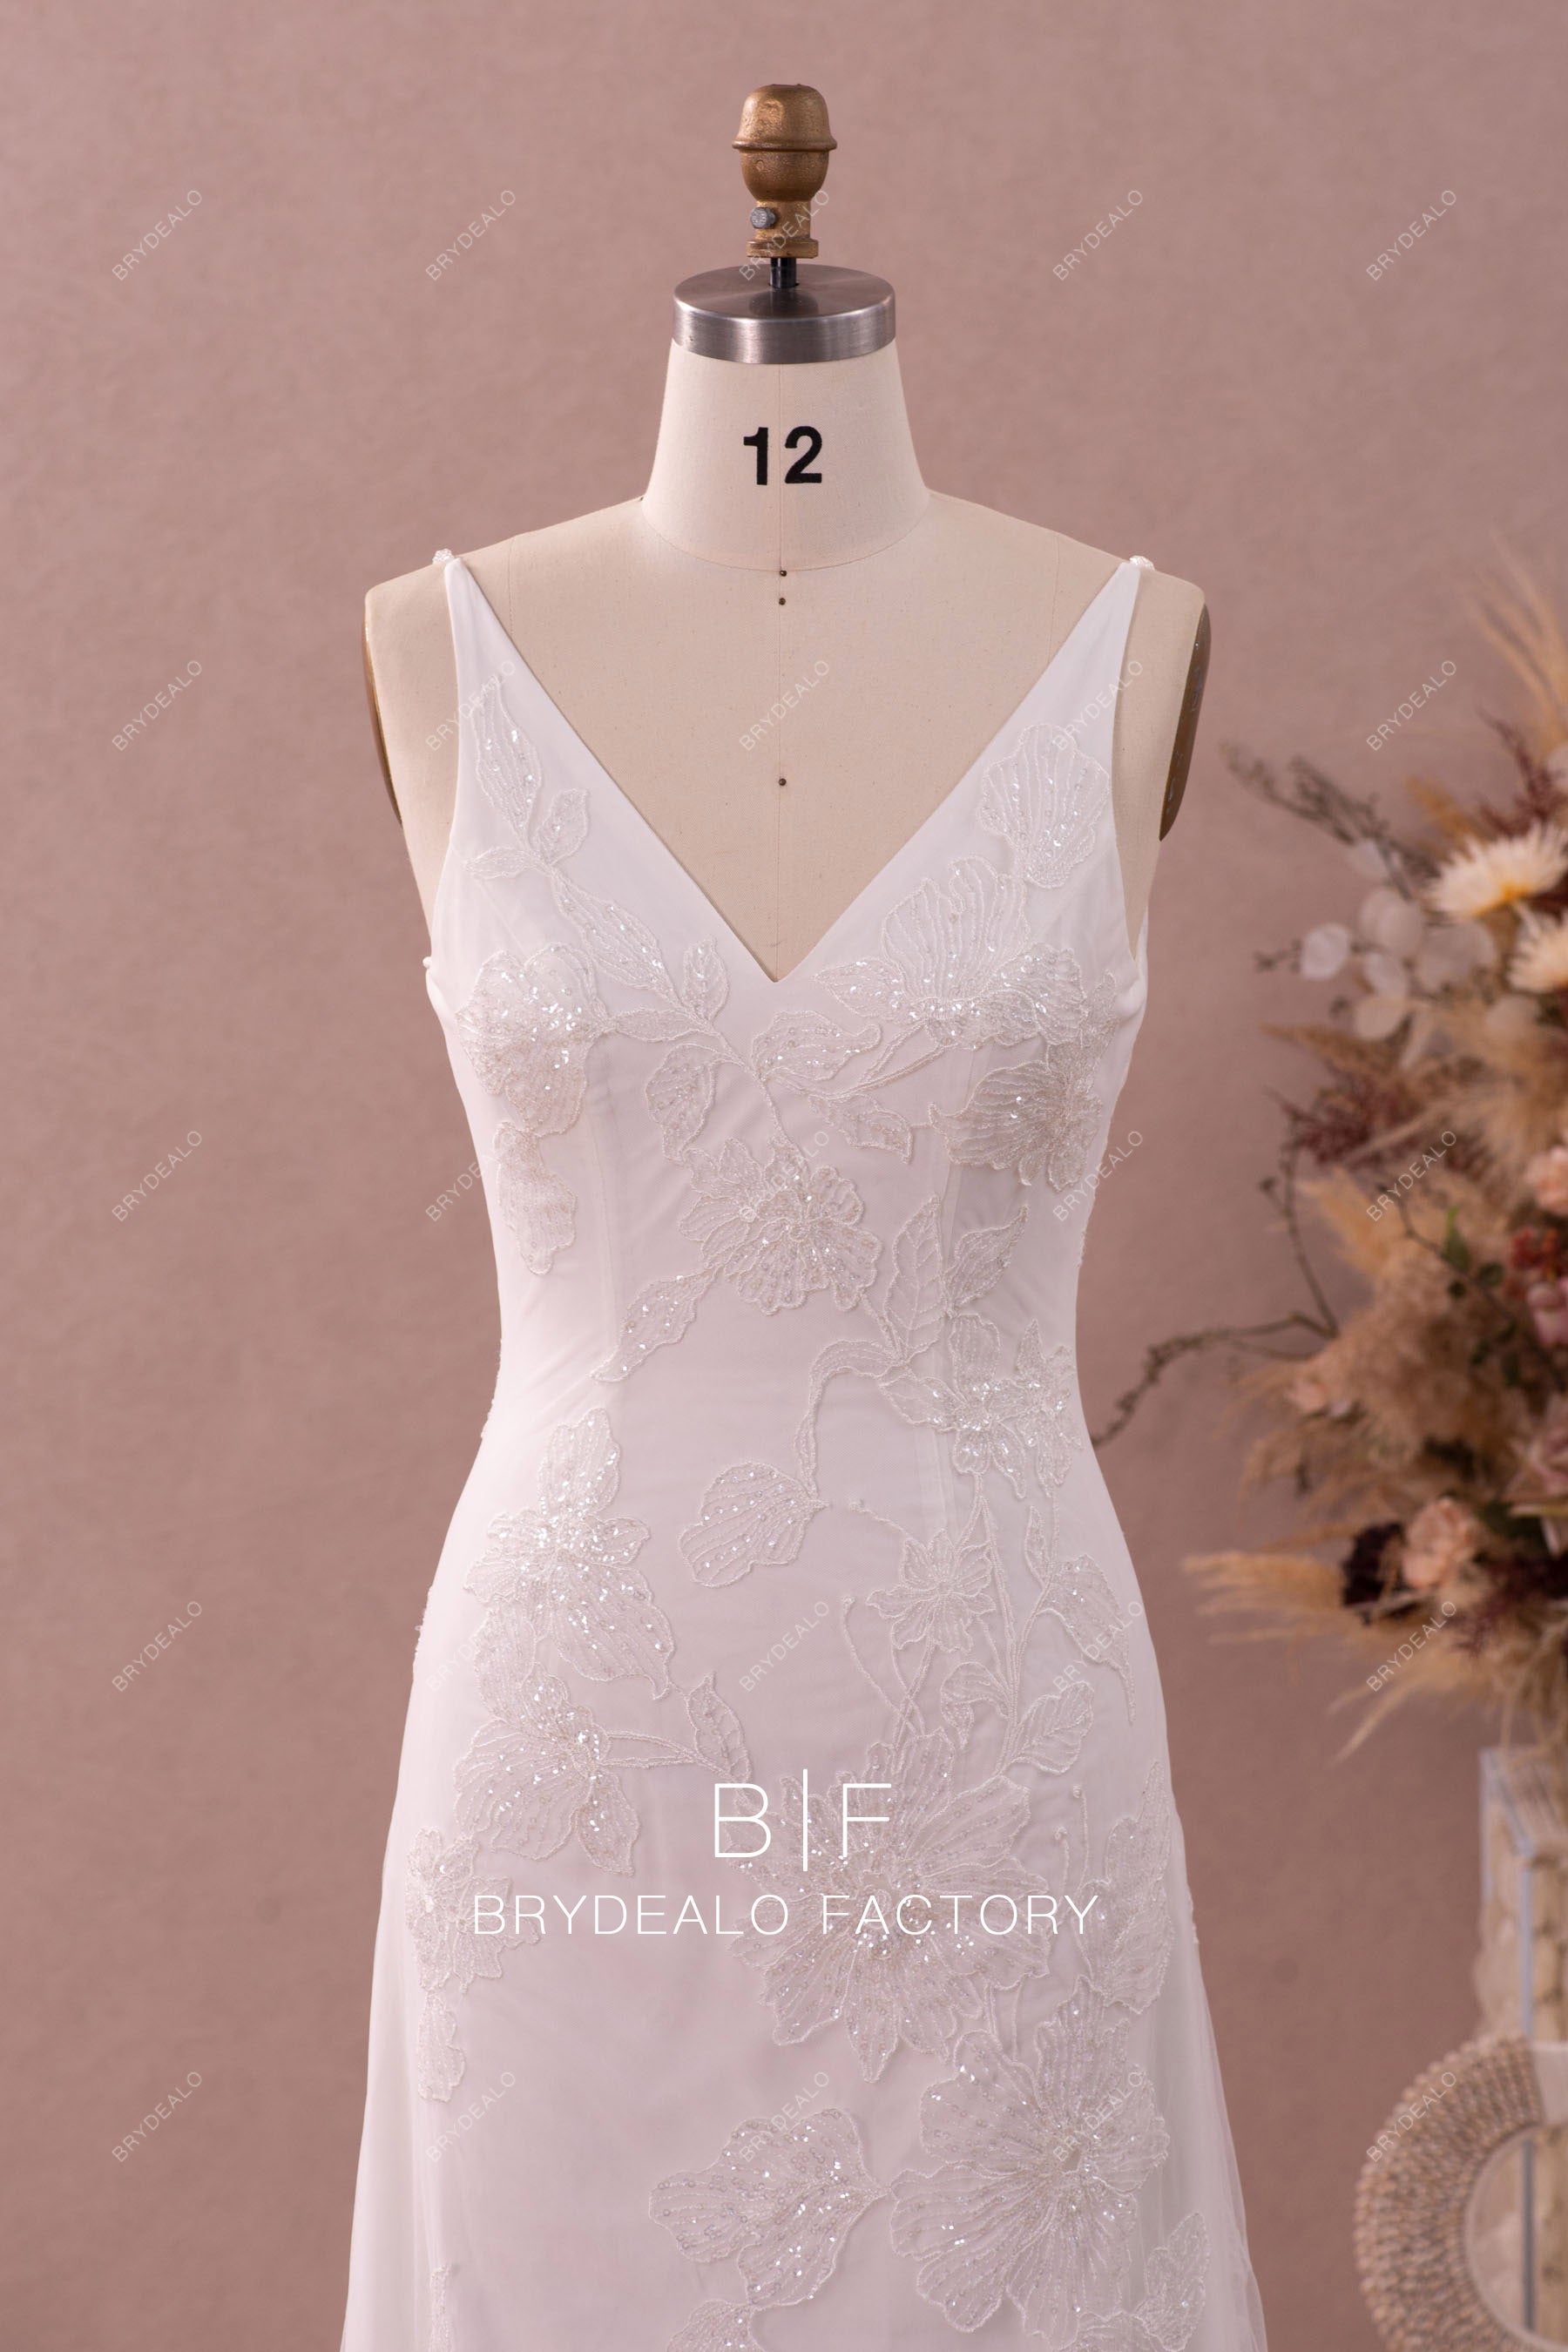 shimmery flower lace wedding dress